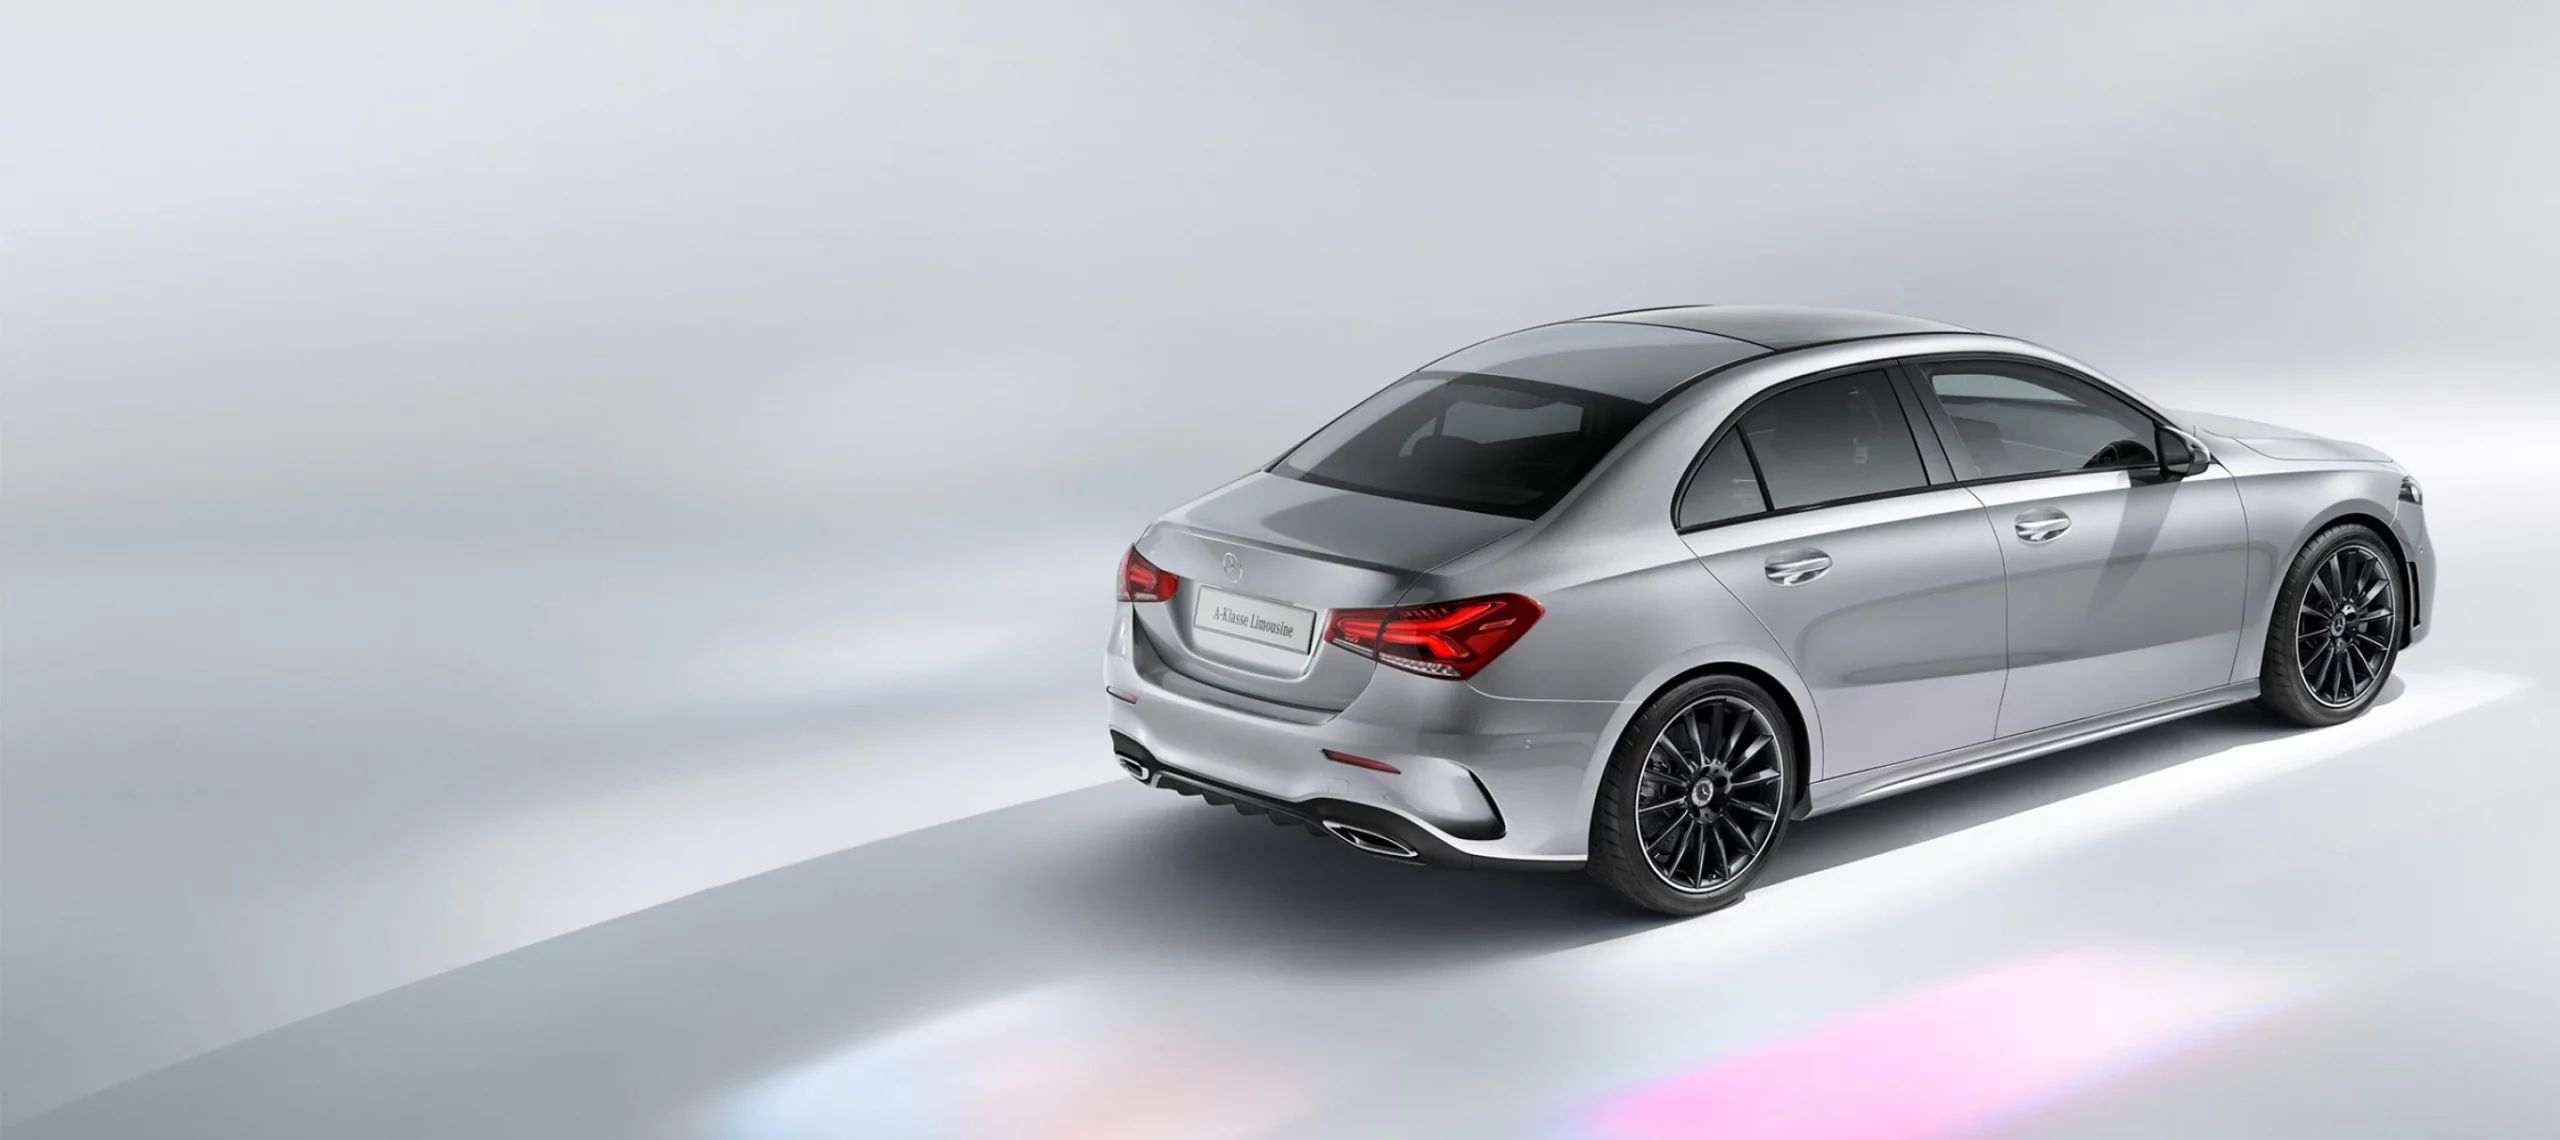 Harga Mercedes Benz A Class Saloon Terbaru, Spesifikasi dan Interior 2022!